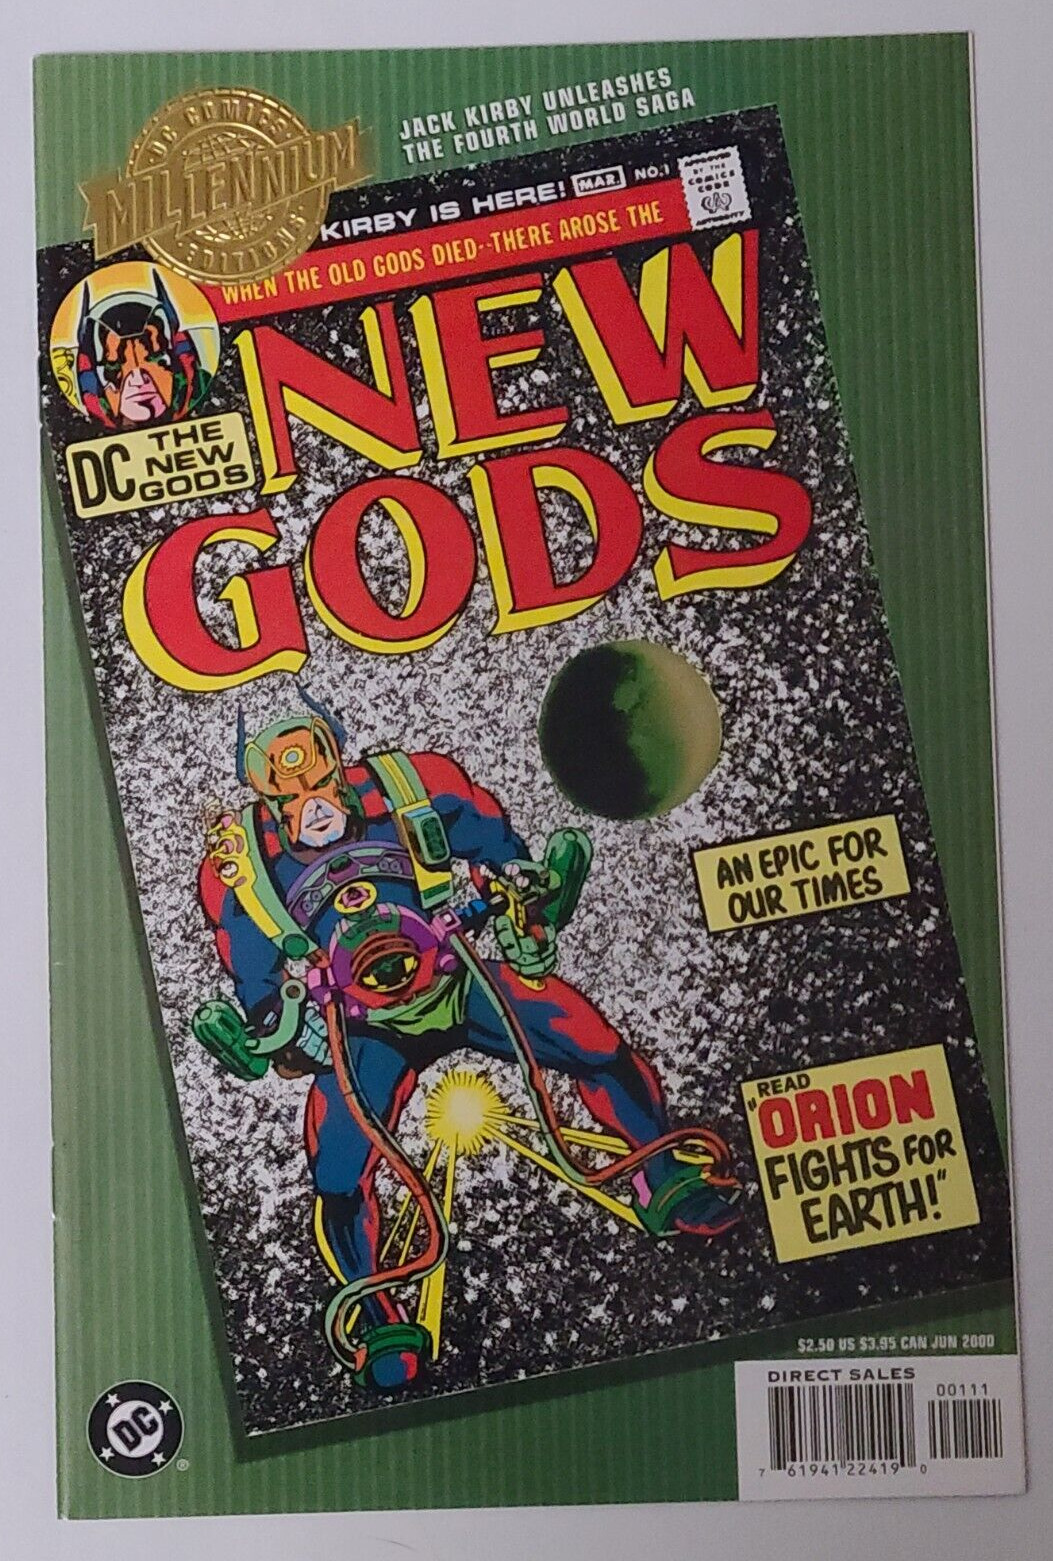 DC COMICS MILLENIUM EDITIONS (DC 2000) NEW GODS #1 (DC 1971) KIRBY'S 4TH WORLD